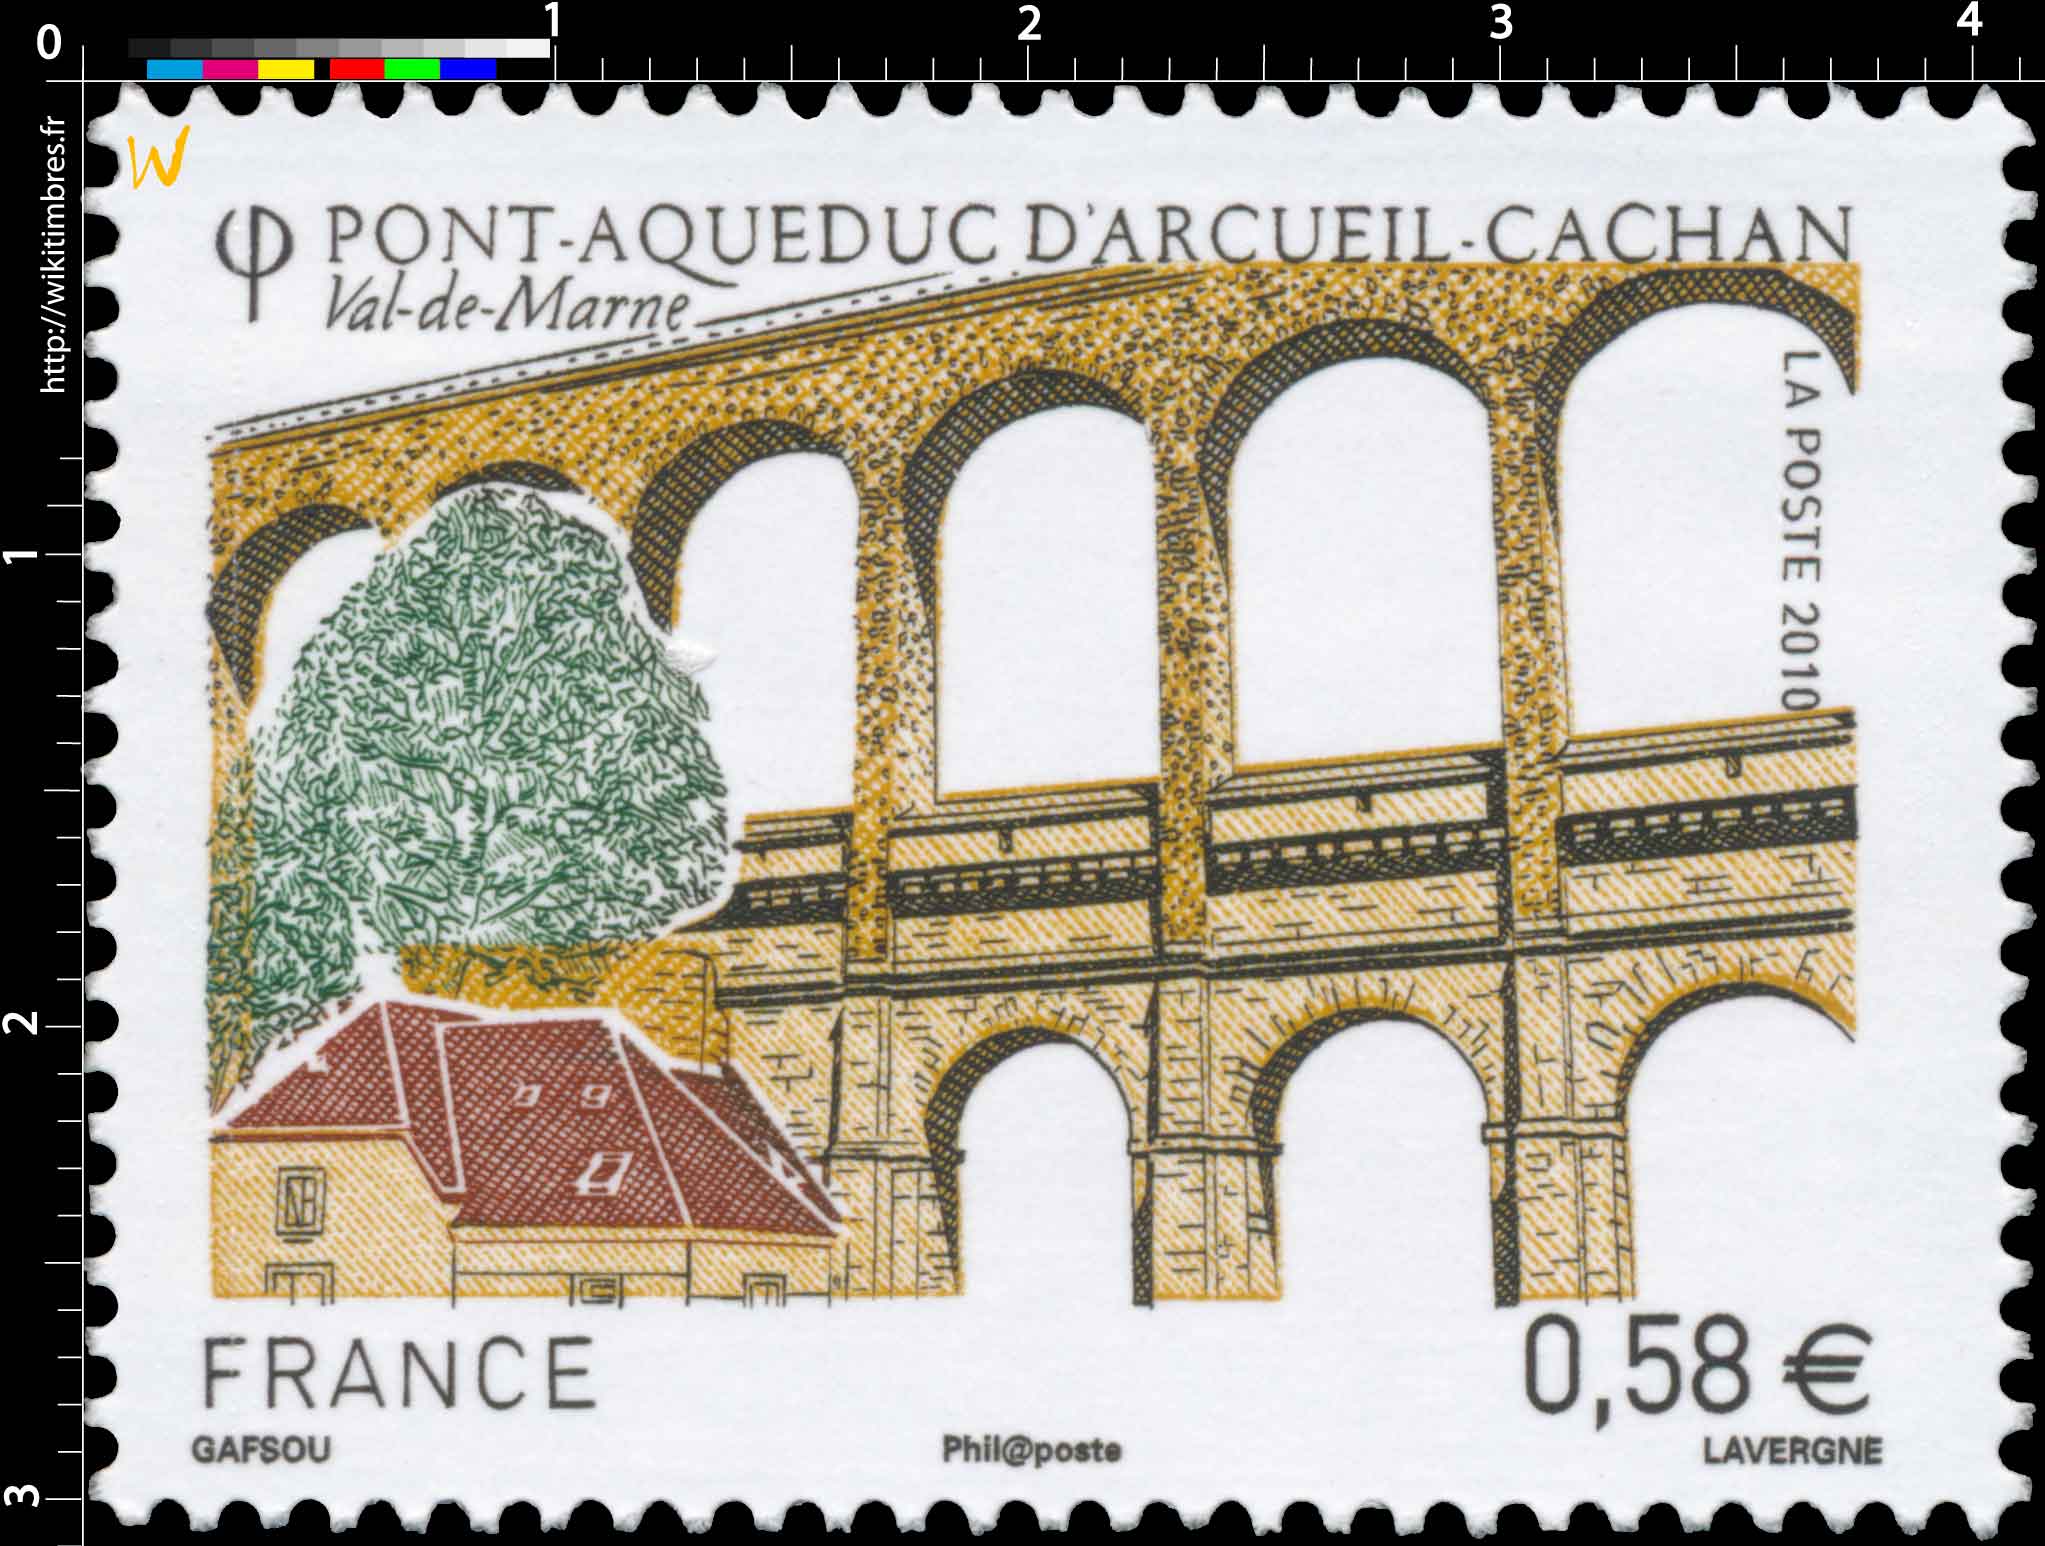 2010 Pont-aqueduc d’Arcueil-Cachan Val-de-Marne